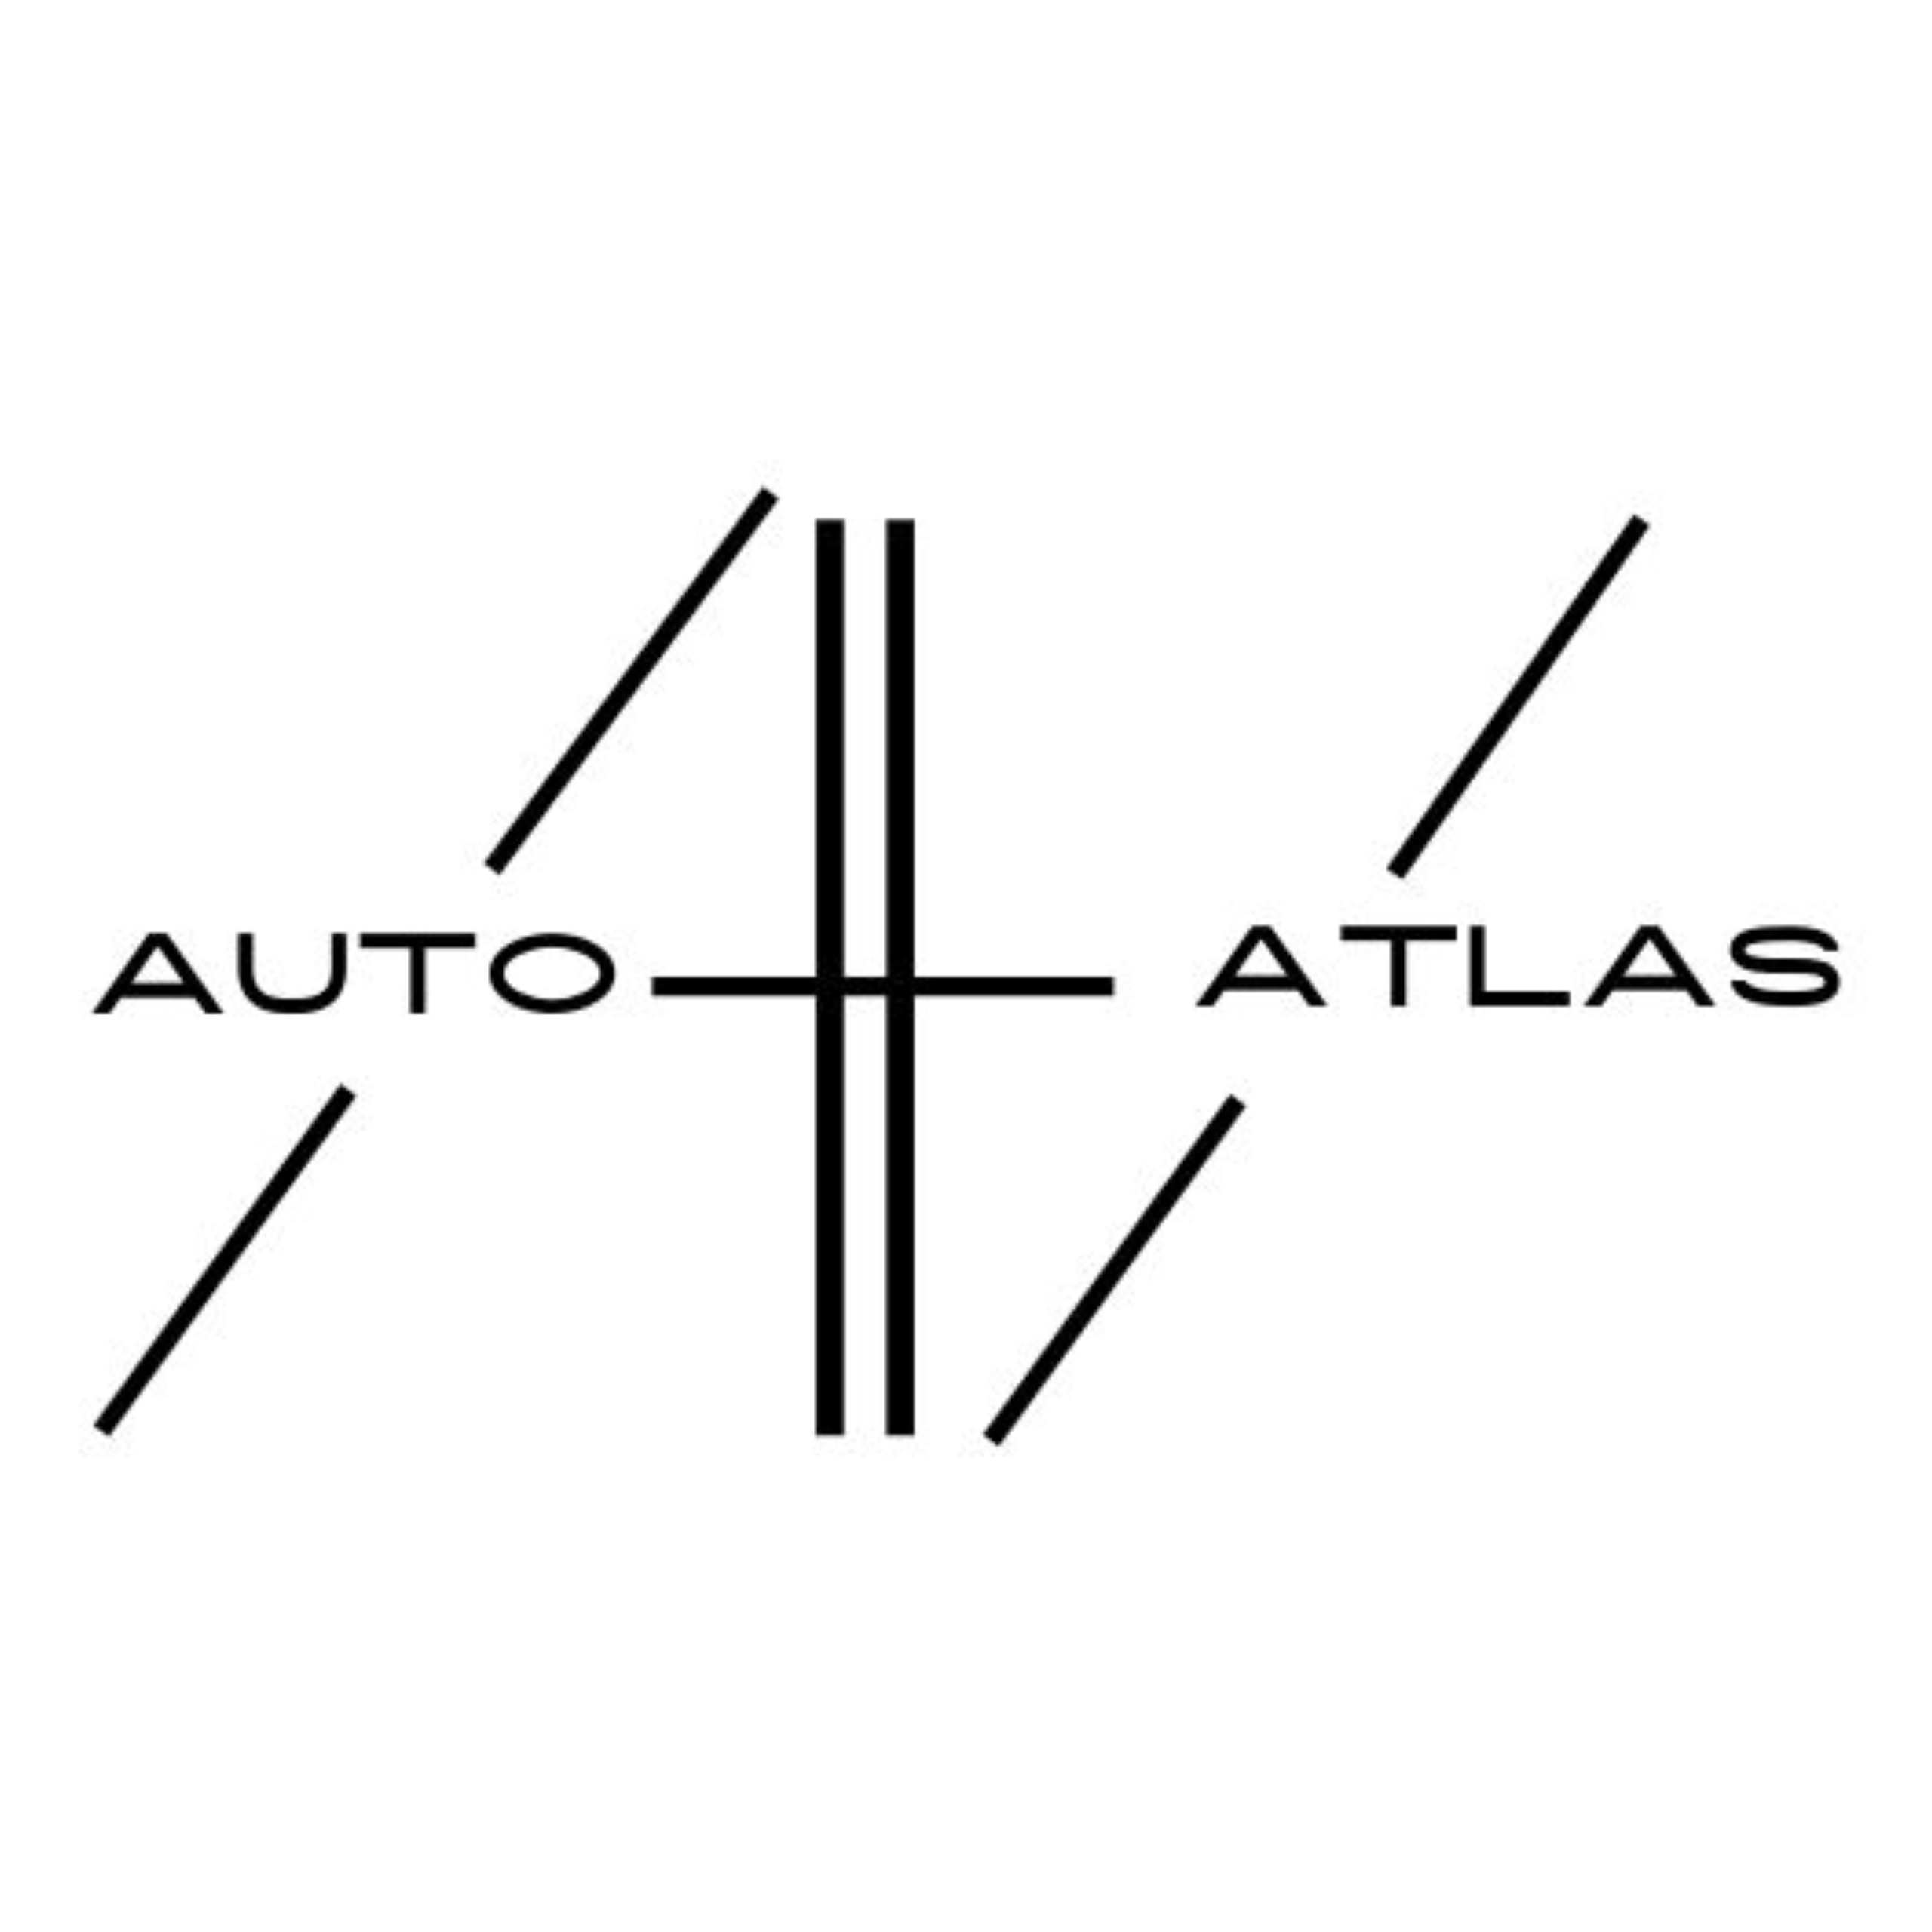 The Auto Atlas